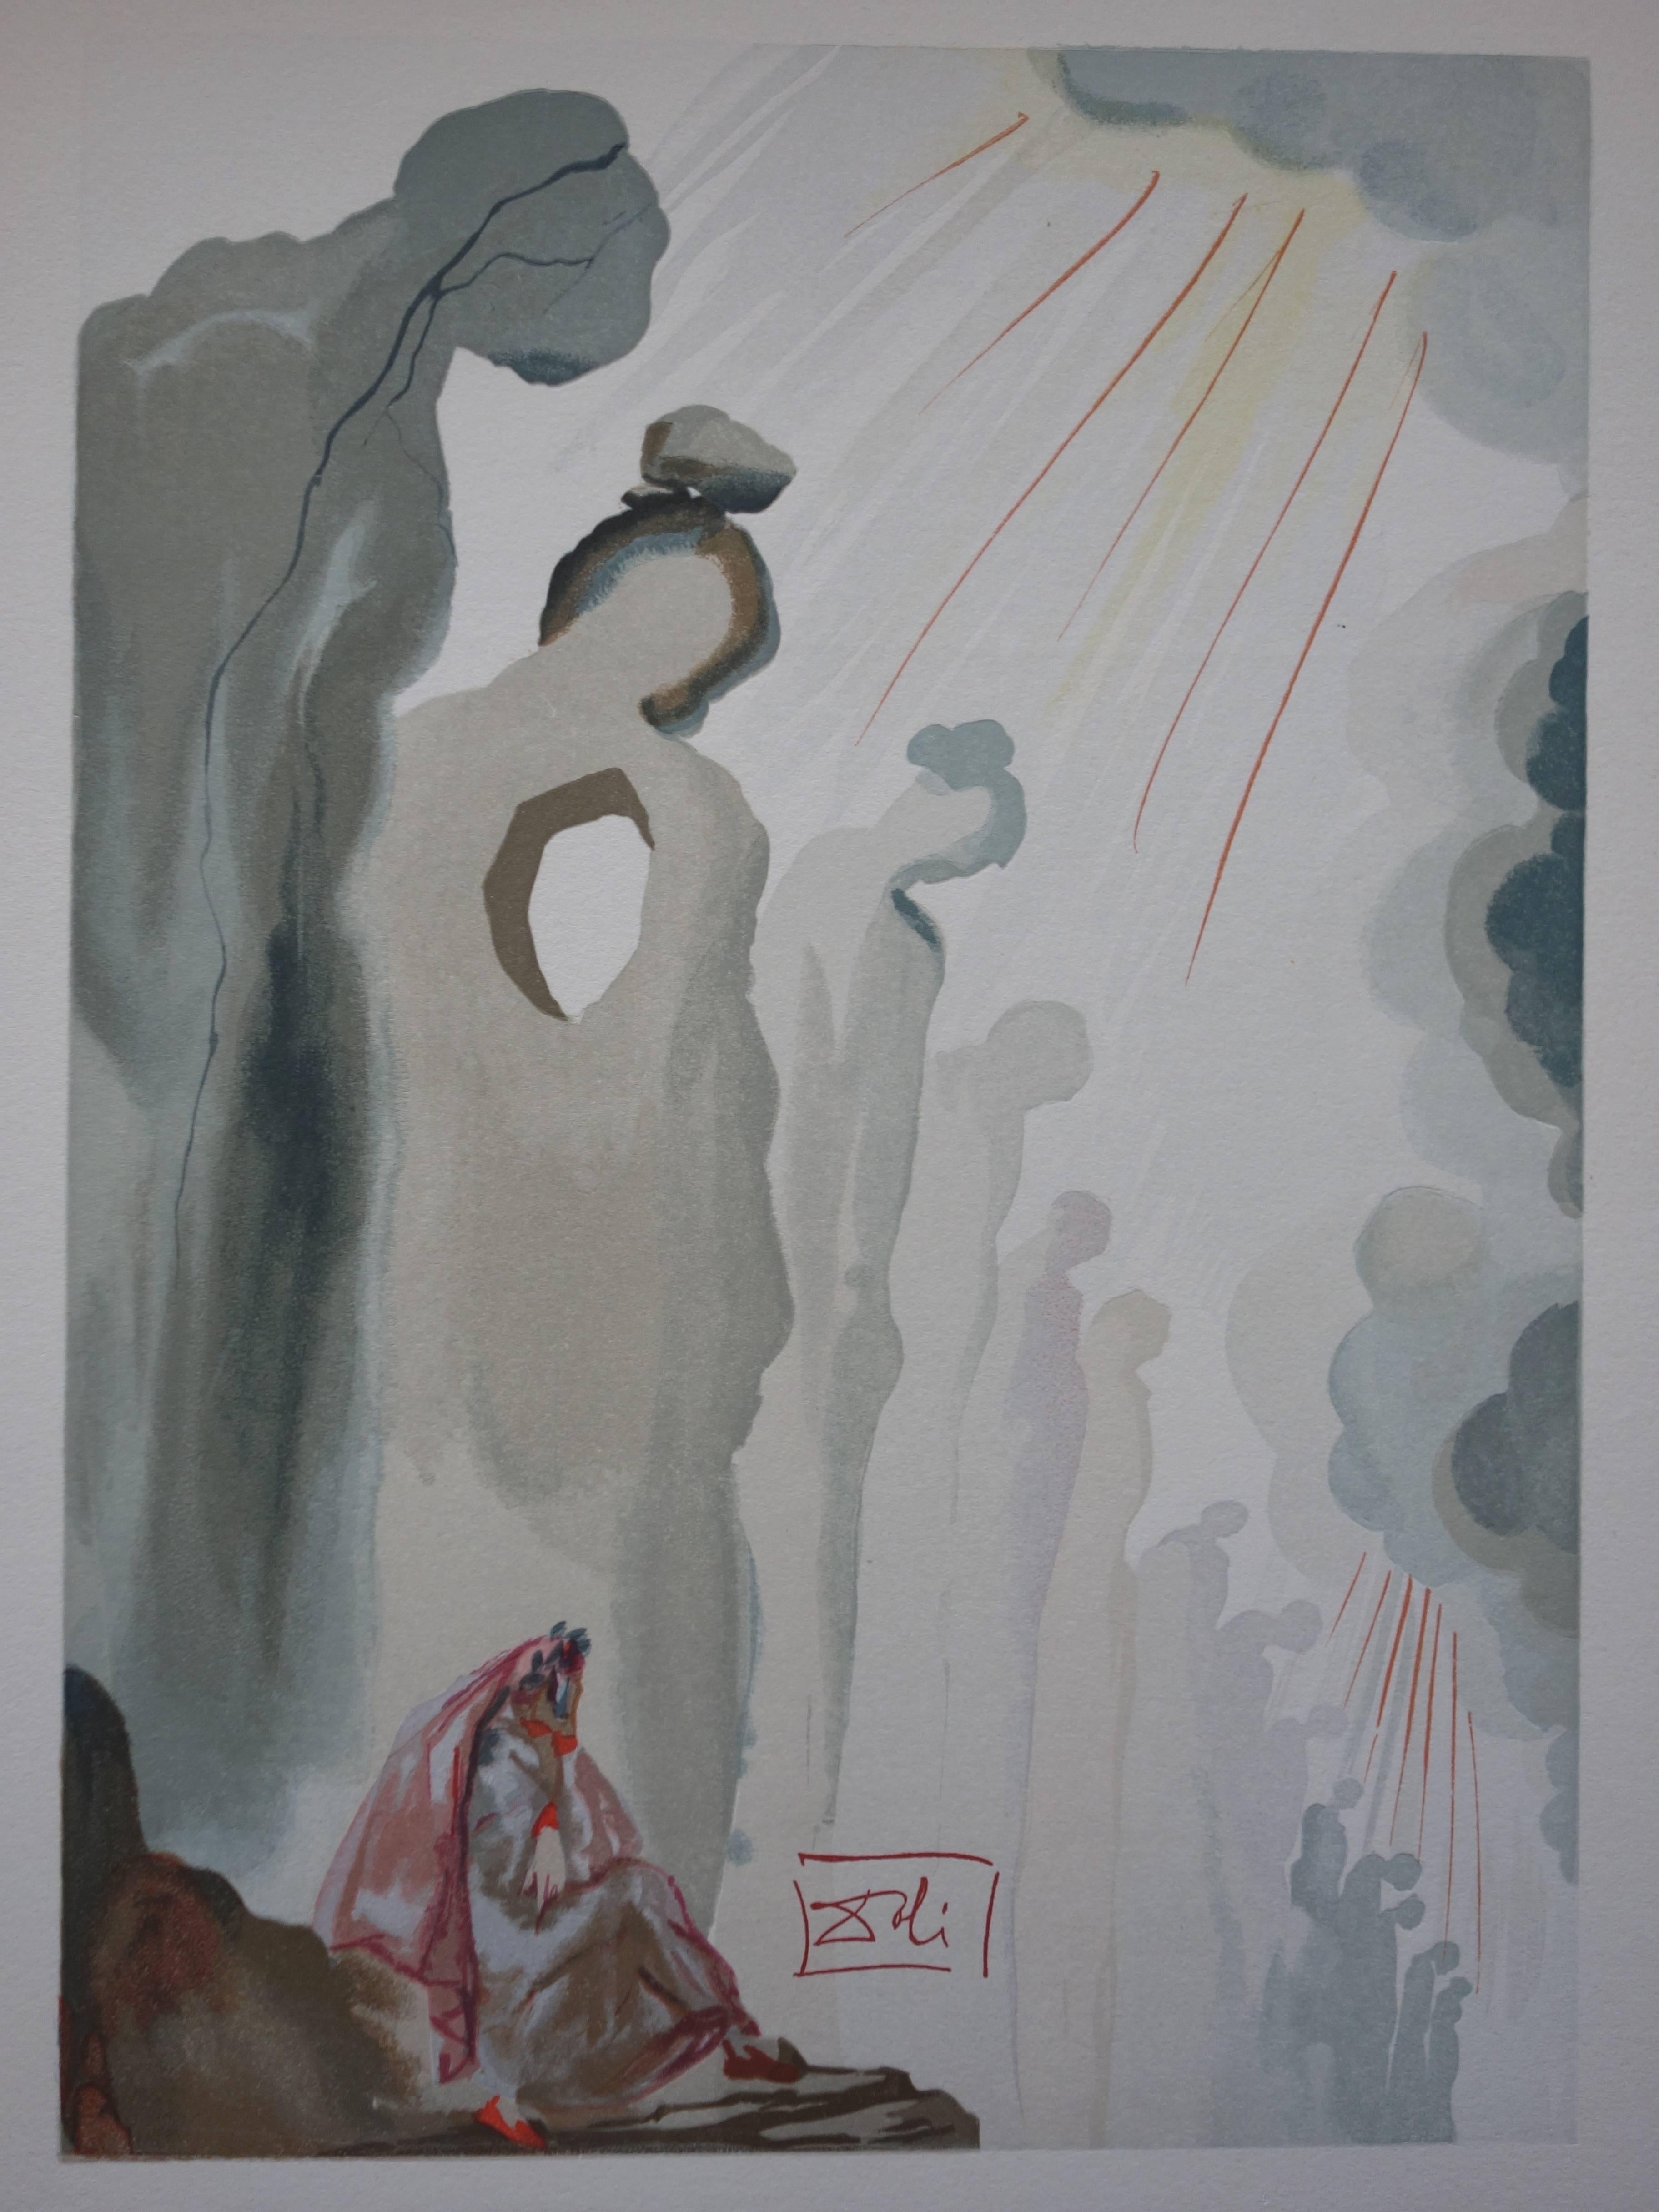 Purgatory 13 - The Second Terrace - Color woodcut - 1963 - Surrealist Print by Salvador Dalí